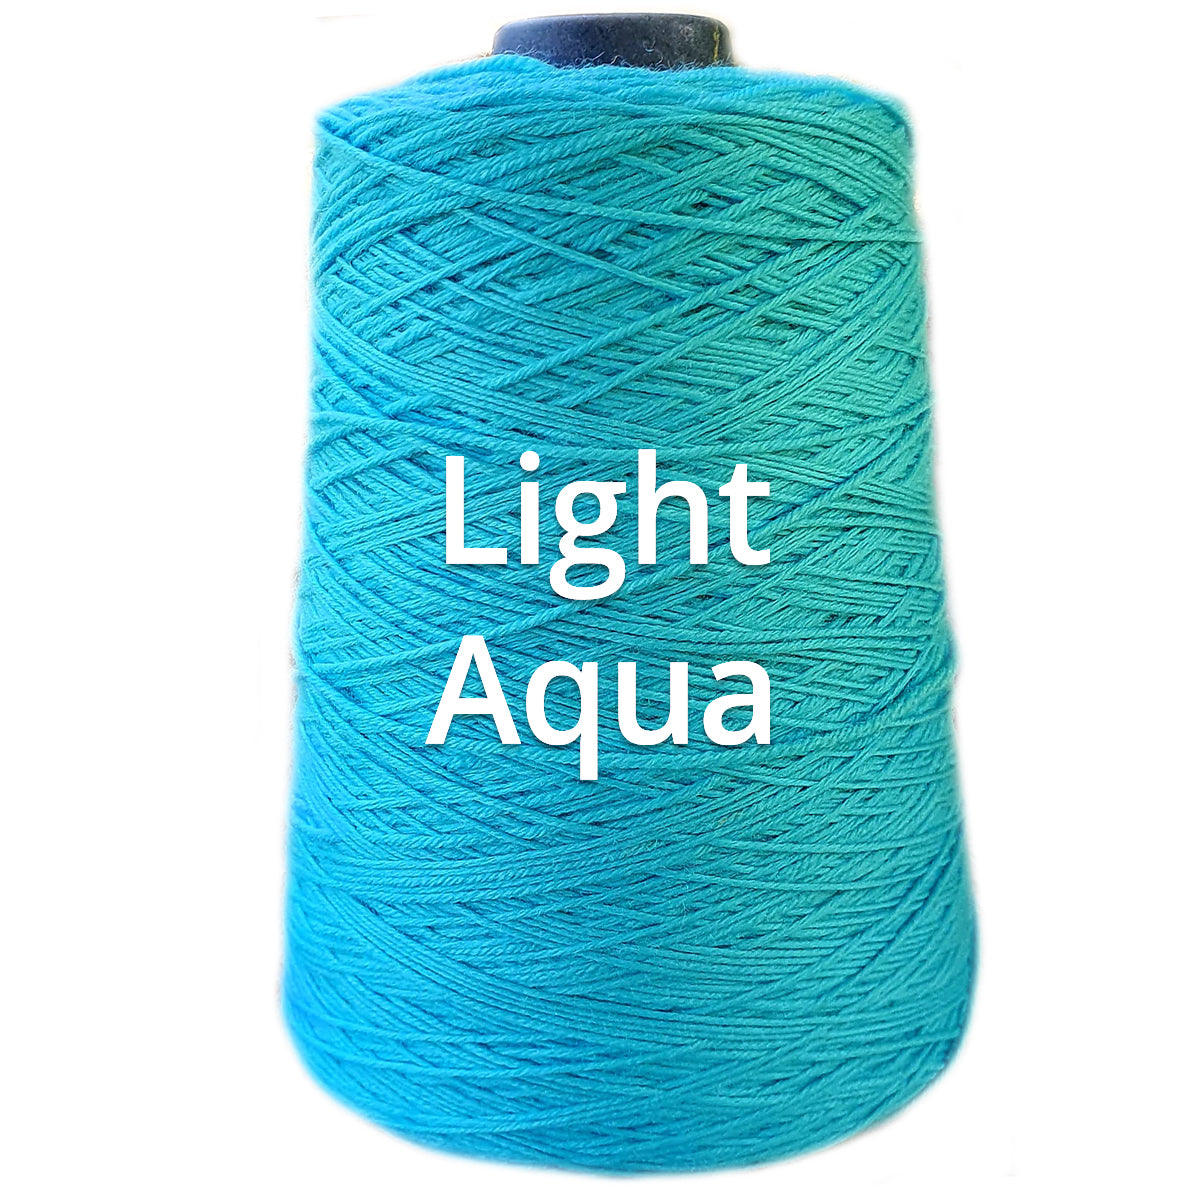 Light Aqua - Nundle Collection - 4 Ply Sock Yarn 400g Cone